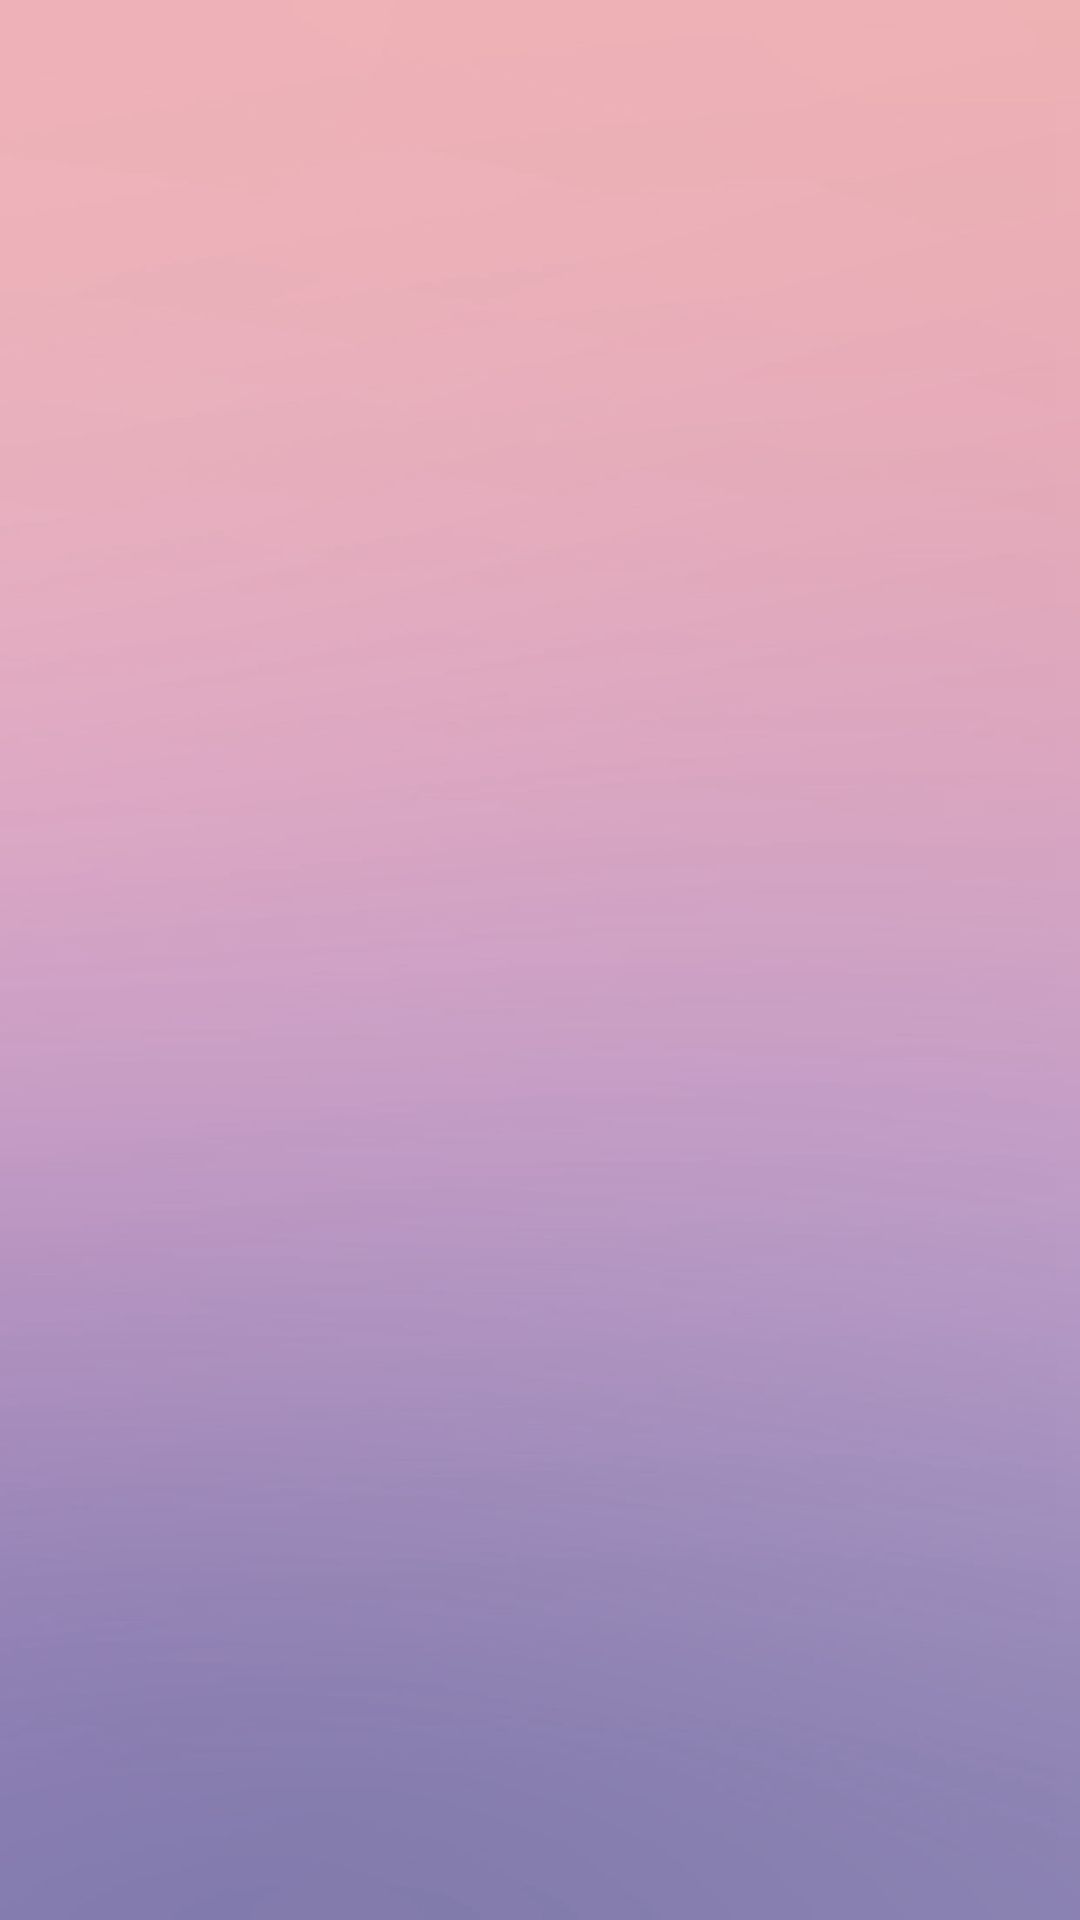 Pink iPhone 6 Wallpaper. Free iPhone 6s Wallpaper, iPhone 6s